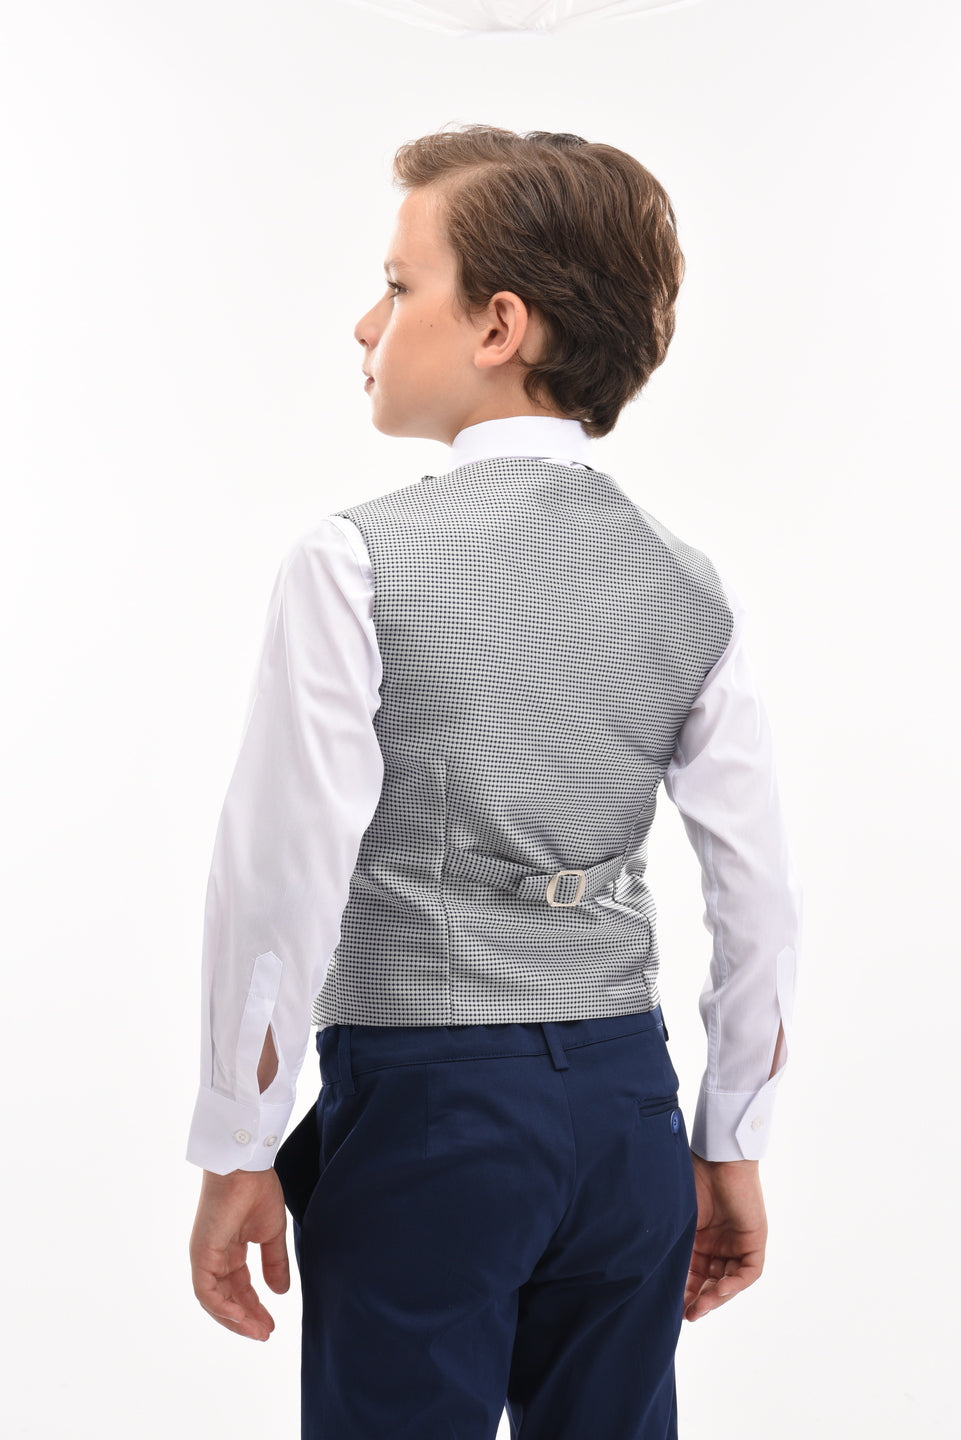 Grey Pin Vest & Bowtie